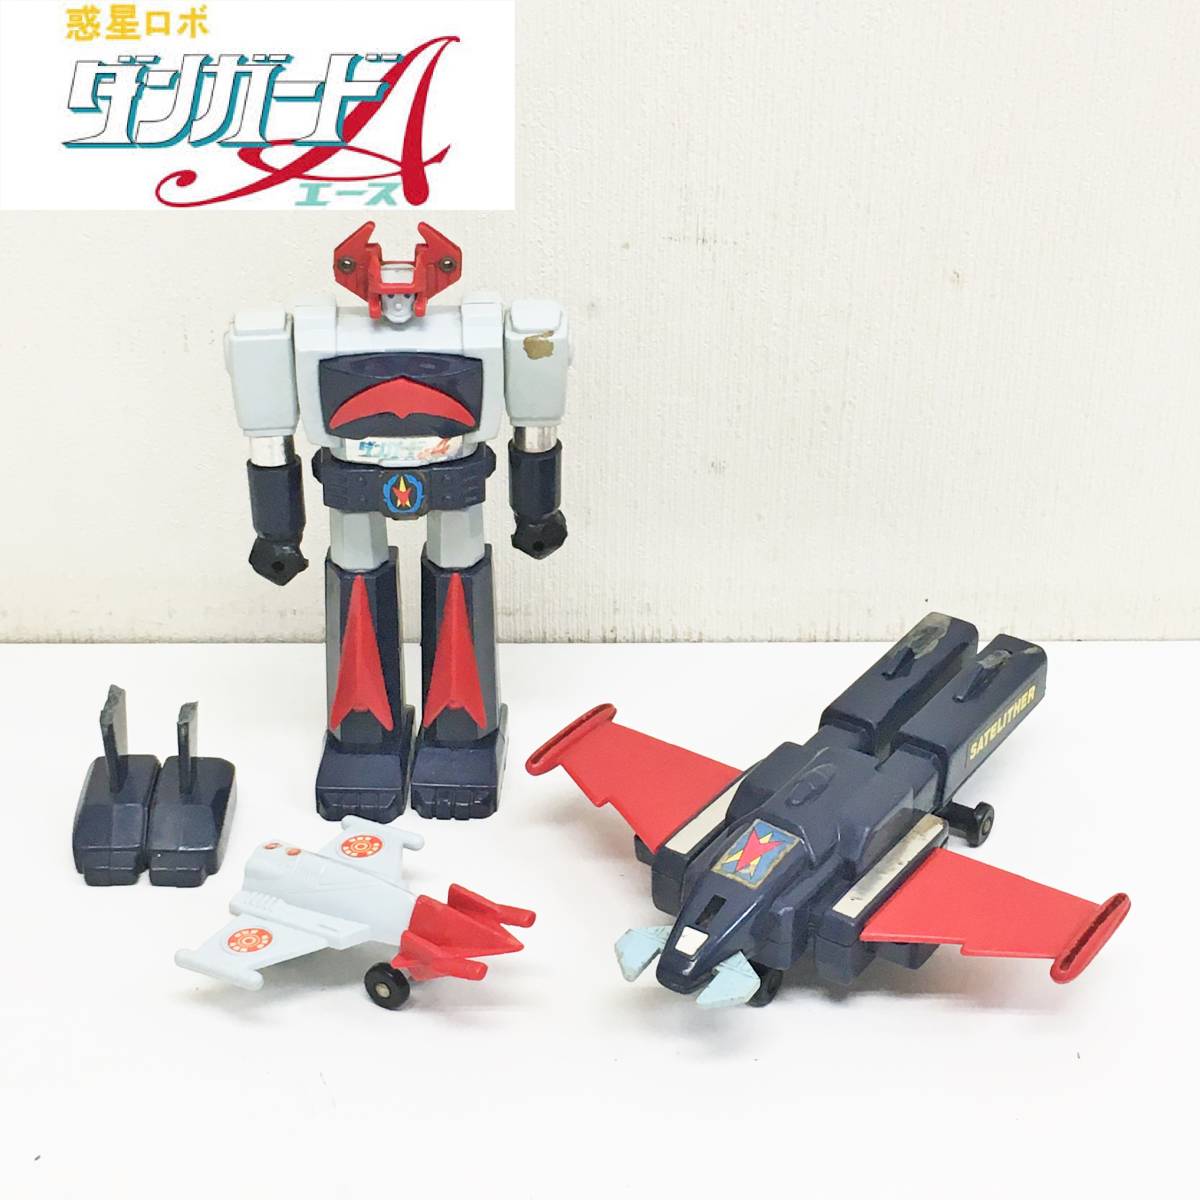  poppy / planet Robot / Dan guard a/ Ace /sate riser / set / summarize / Chogokin / toy / pra toy / Showa Retro / Junk / anime / collection 